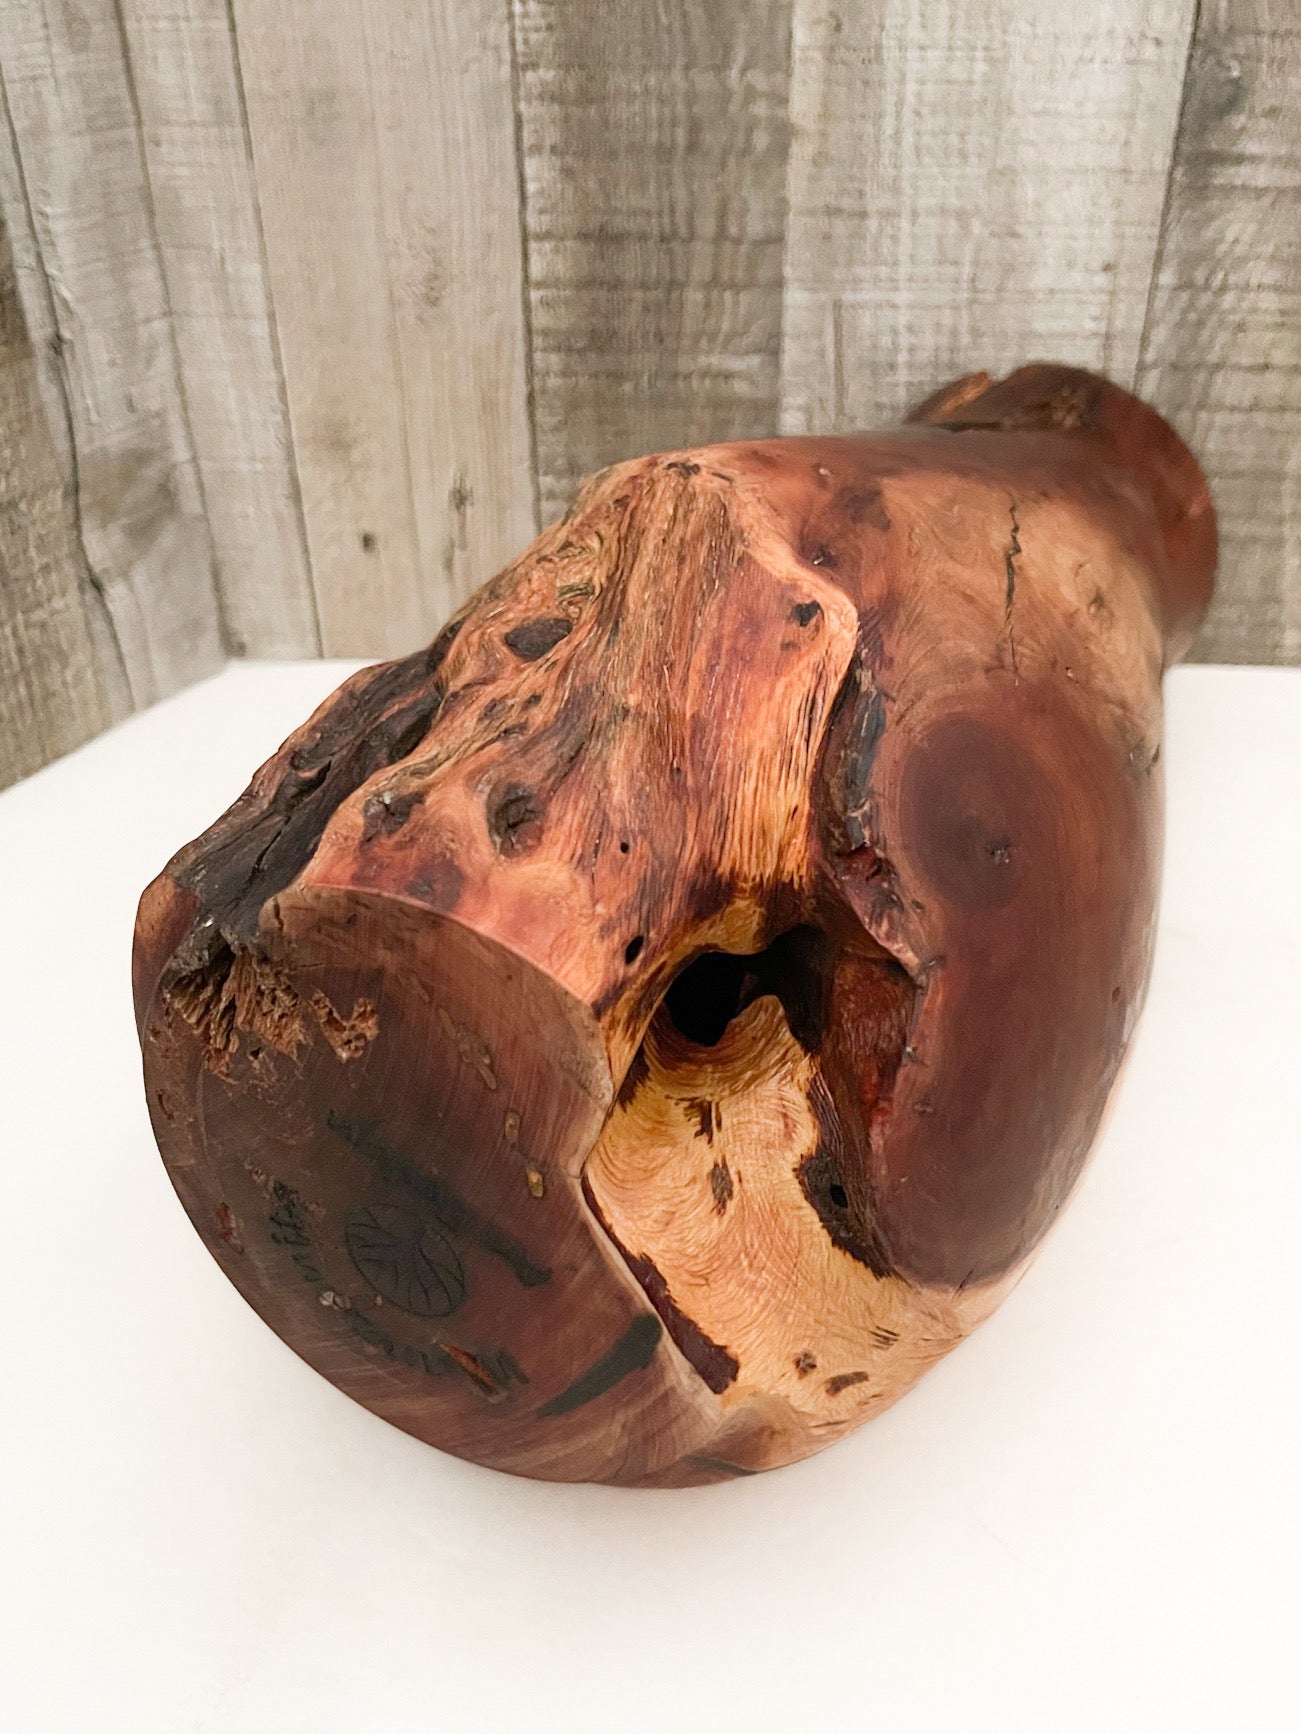 Decorative Manzanita wood vase. 14"H x 6"Dia